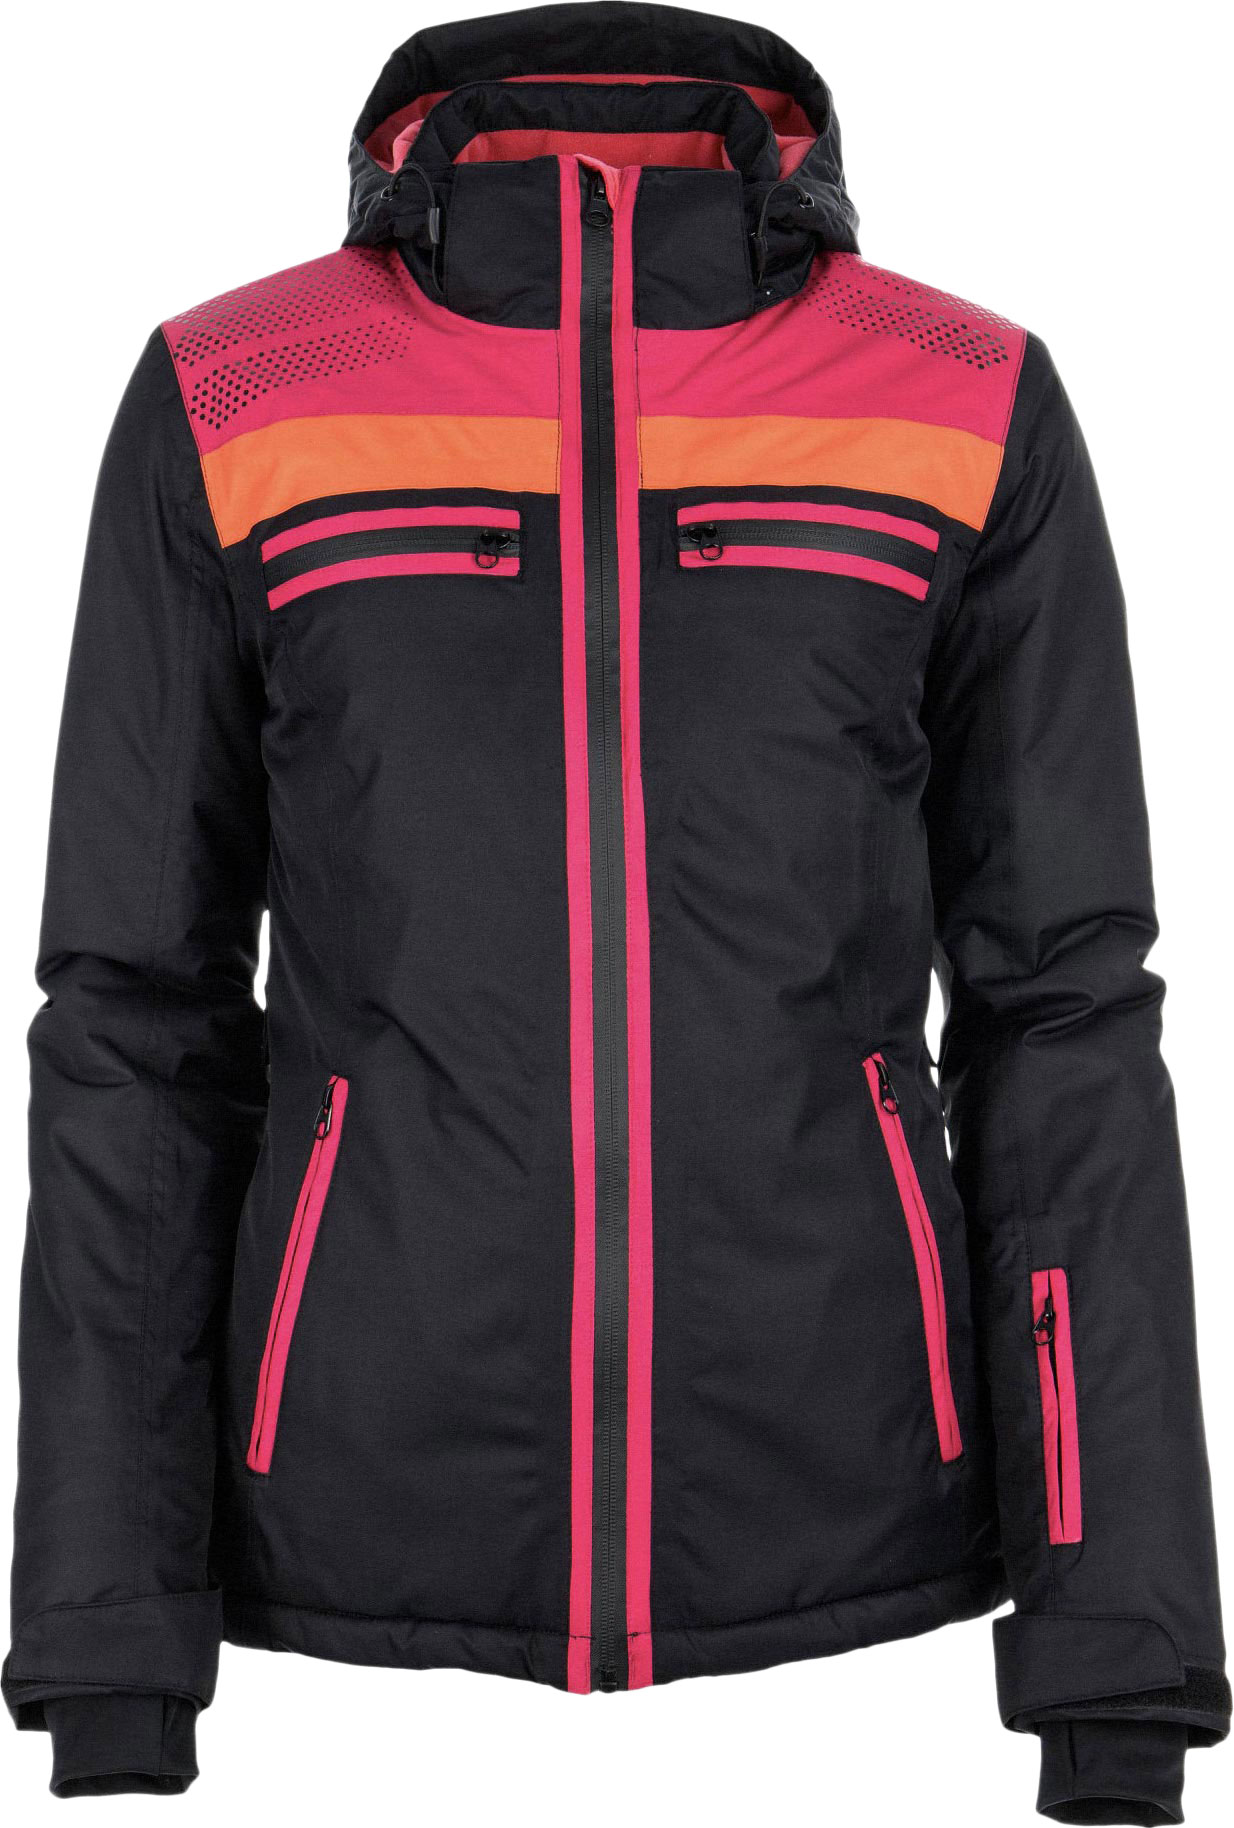 SISINA - Women's Ski Jacket